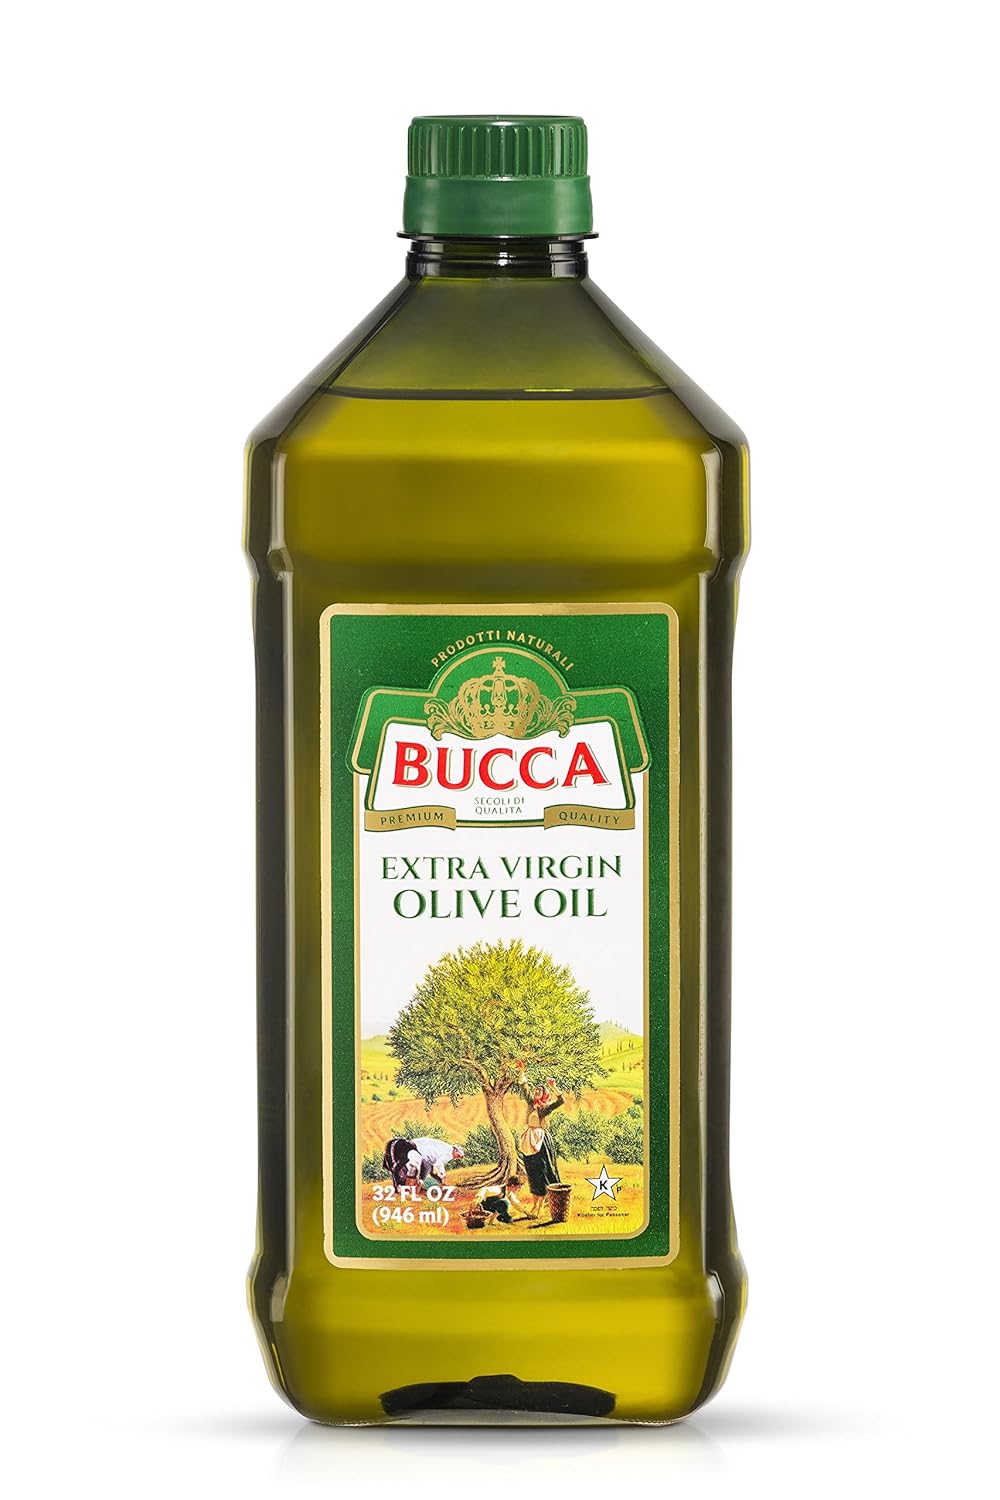 BUCCA002 BUCCA EXTRA VIRGIN OLIVE OIL